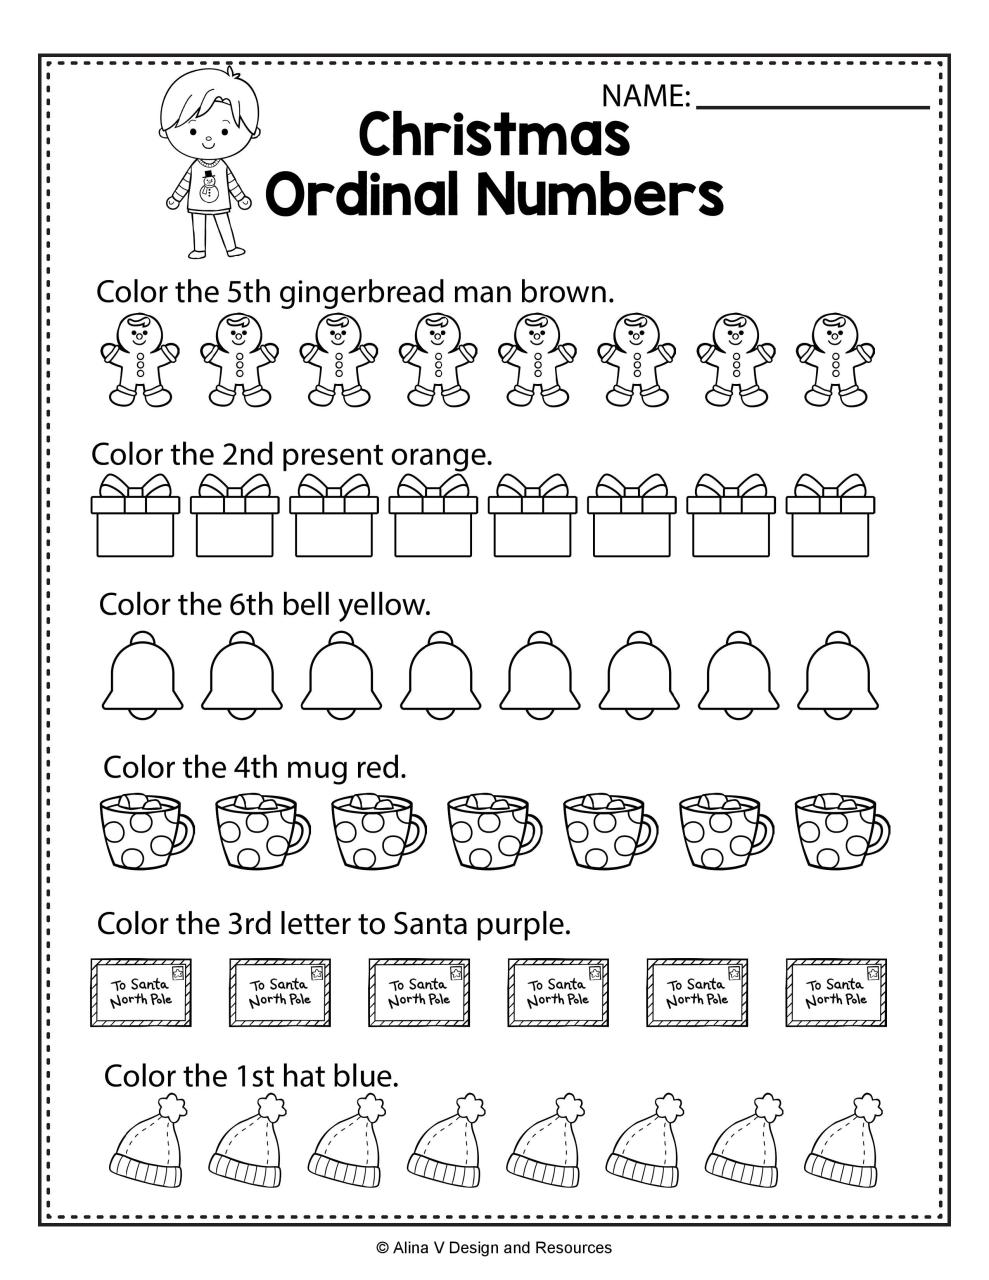 1st Grade Fall Color Worksheets